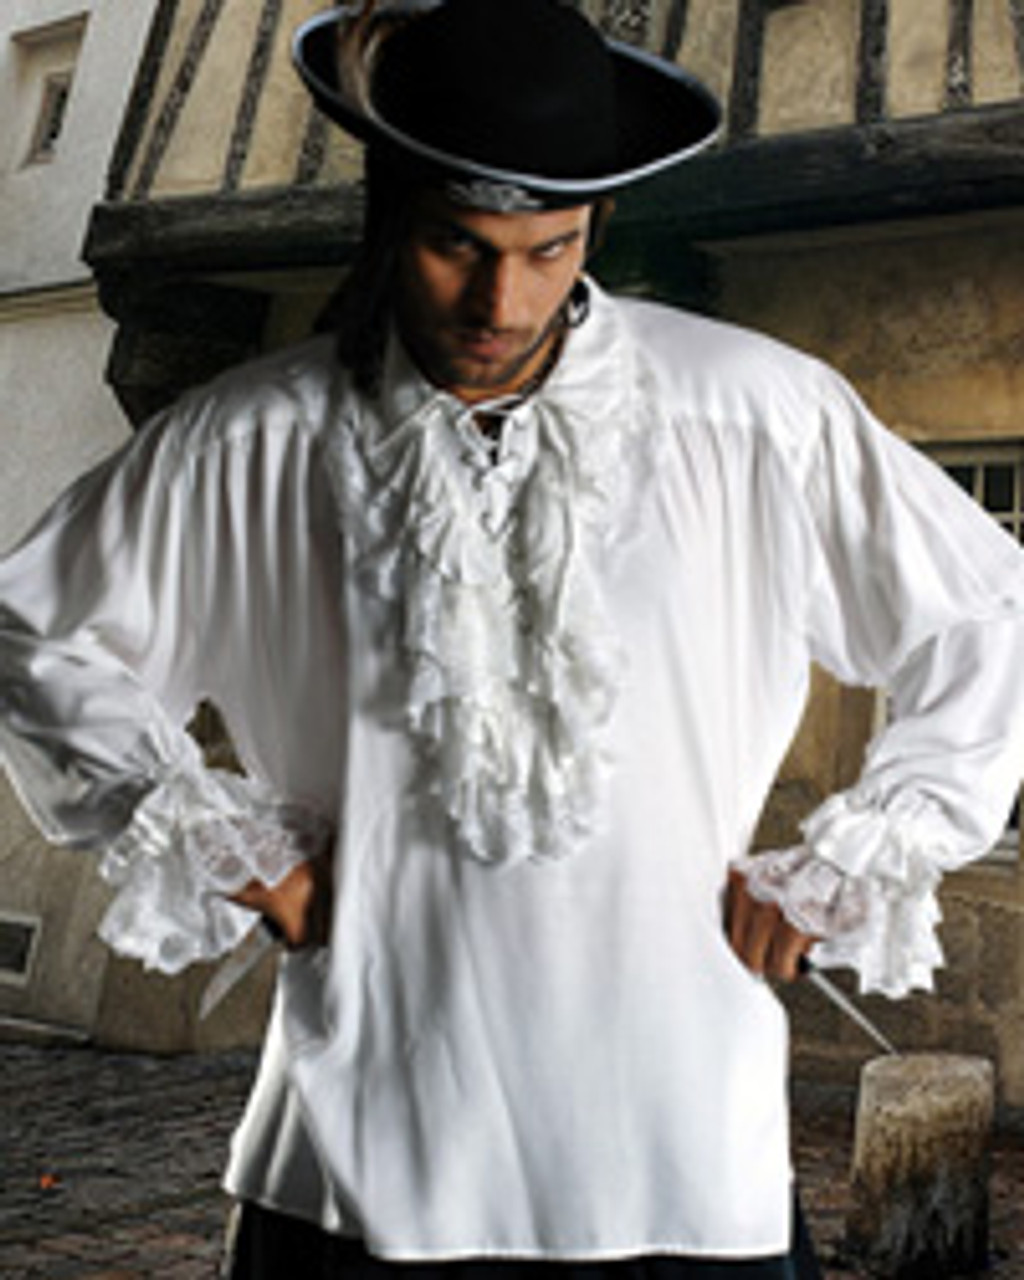 Men's White Lace Ruffle Pirate Shirt